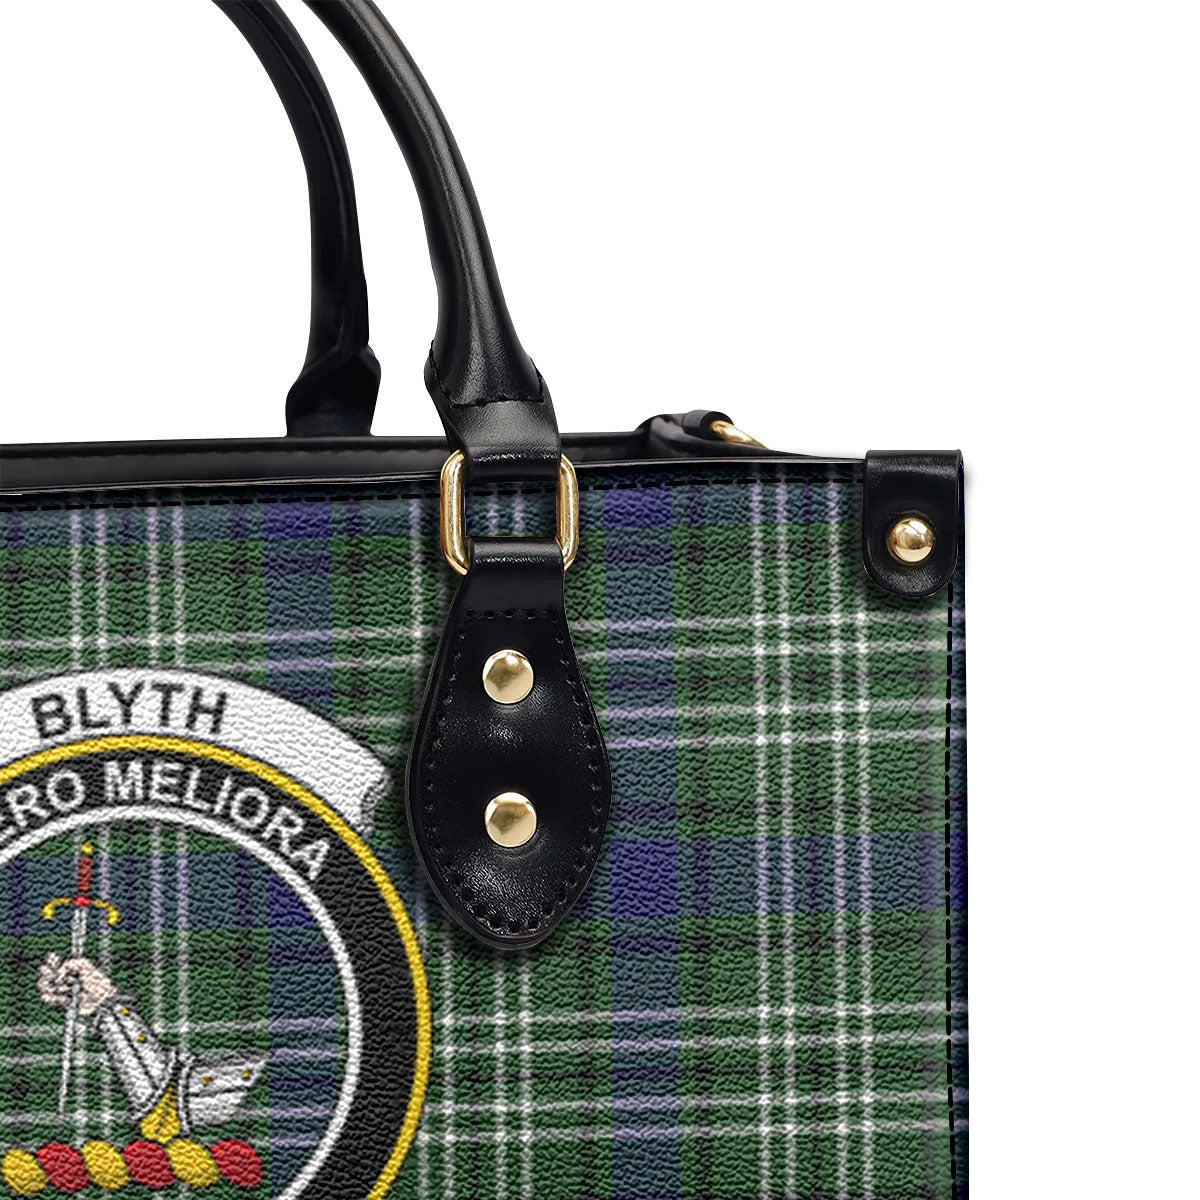 Blyth Tartan Crest Leather Handbag